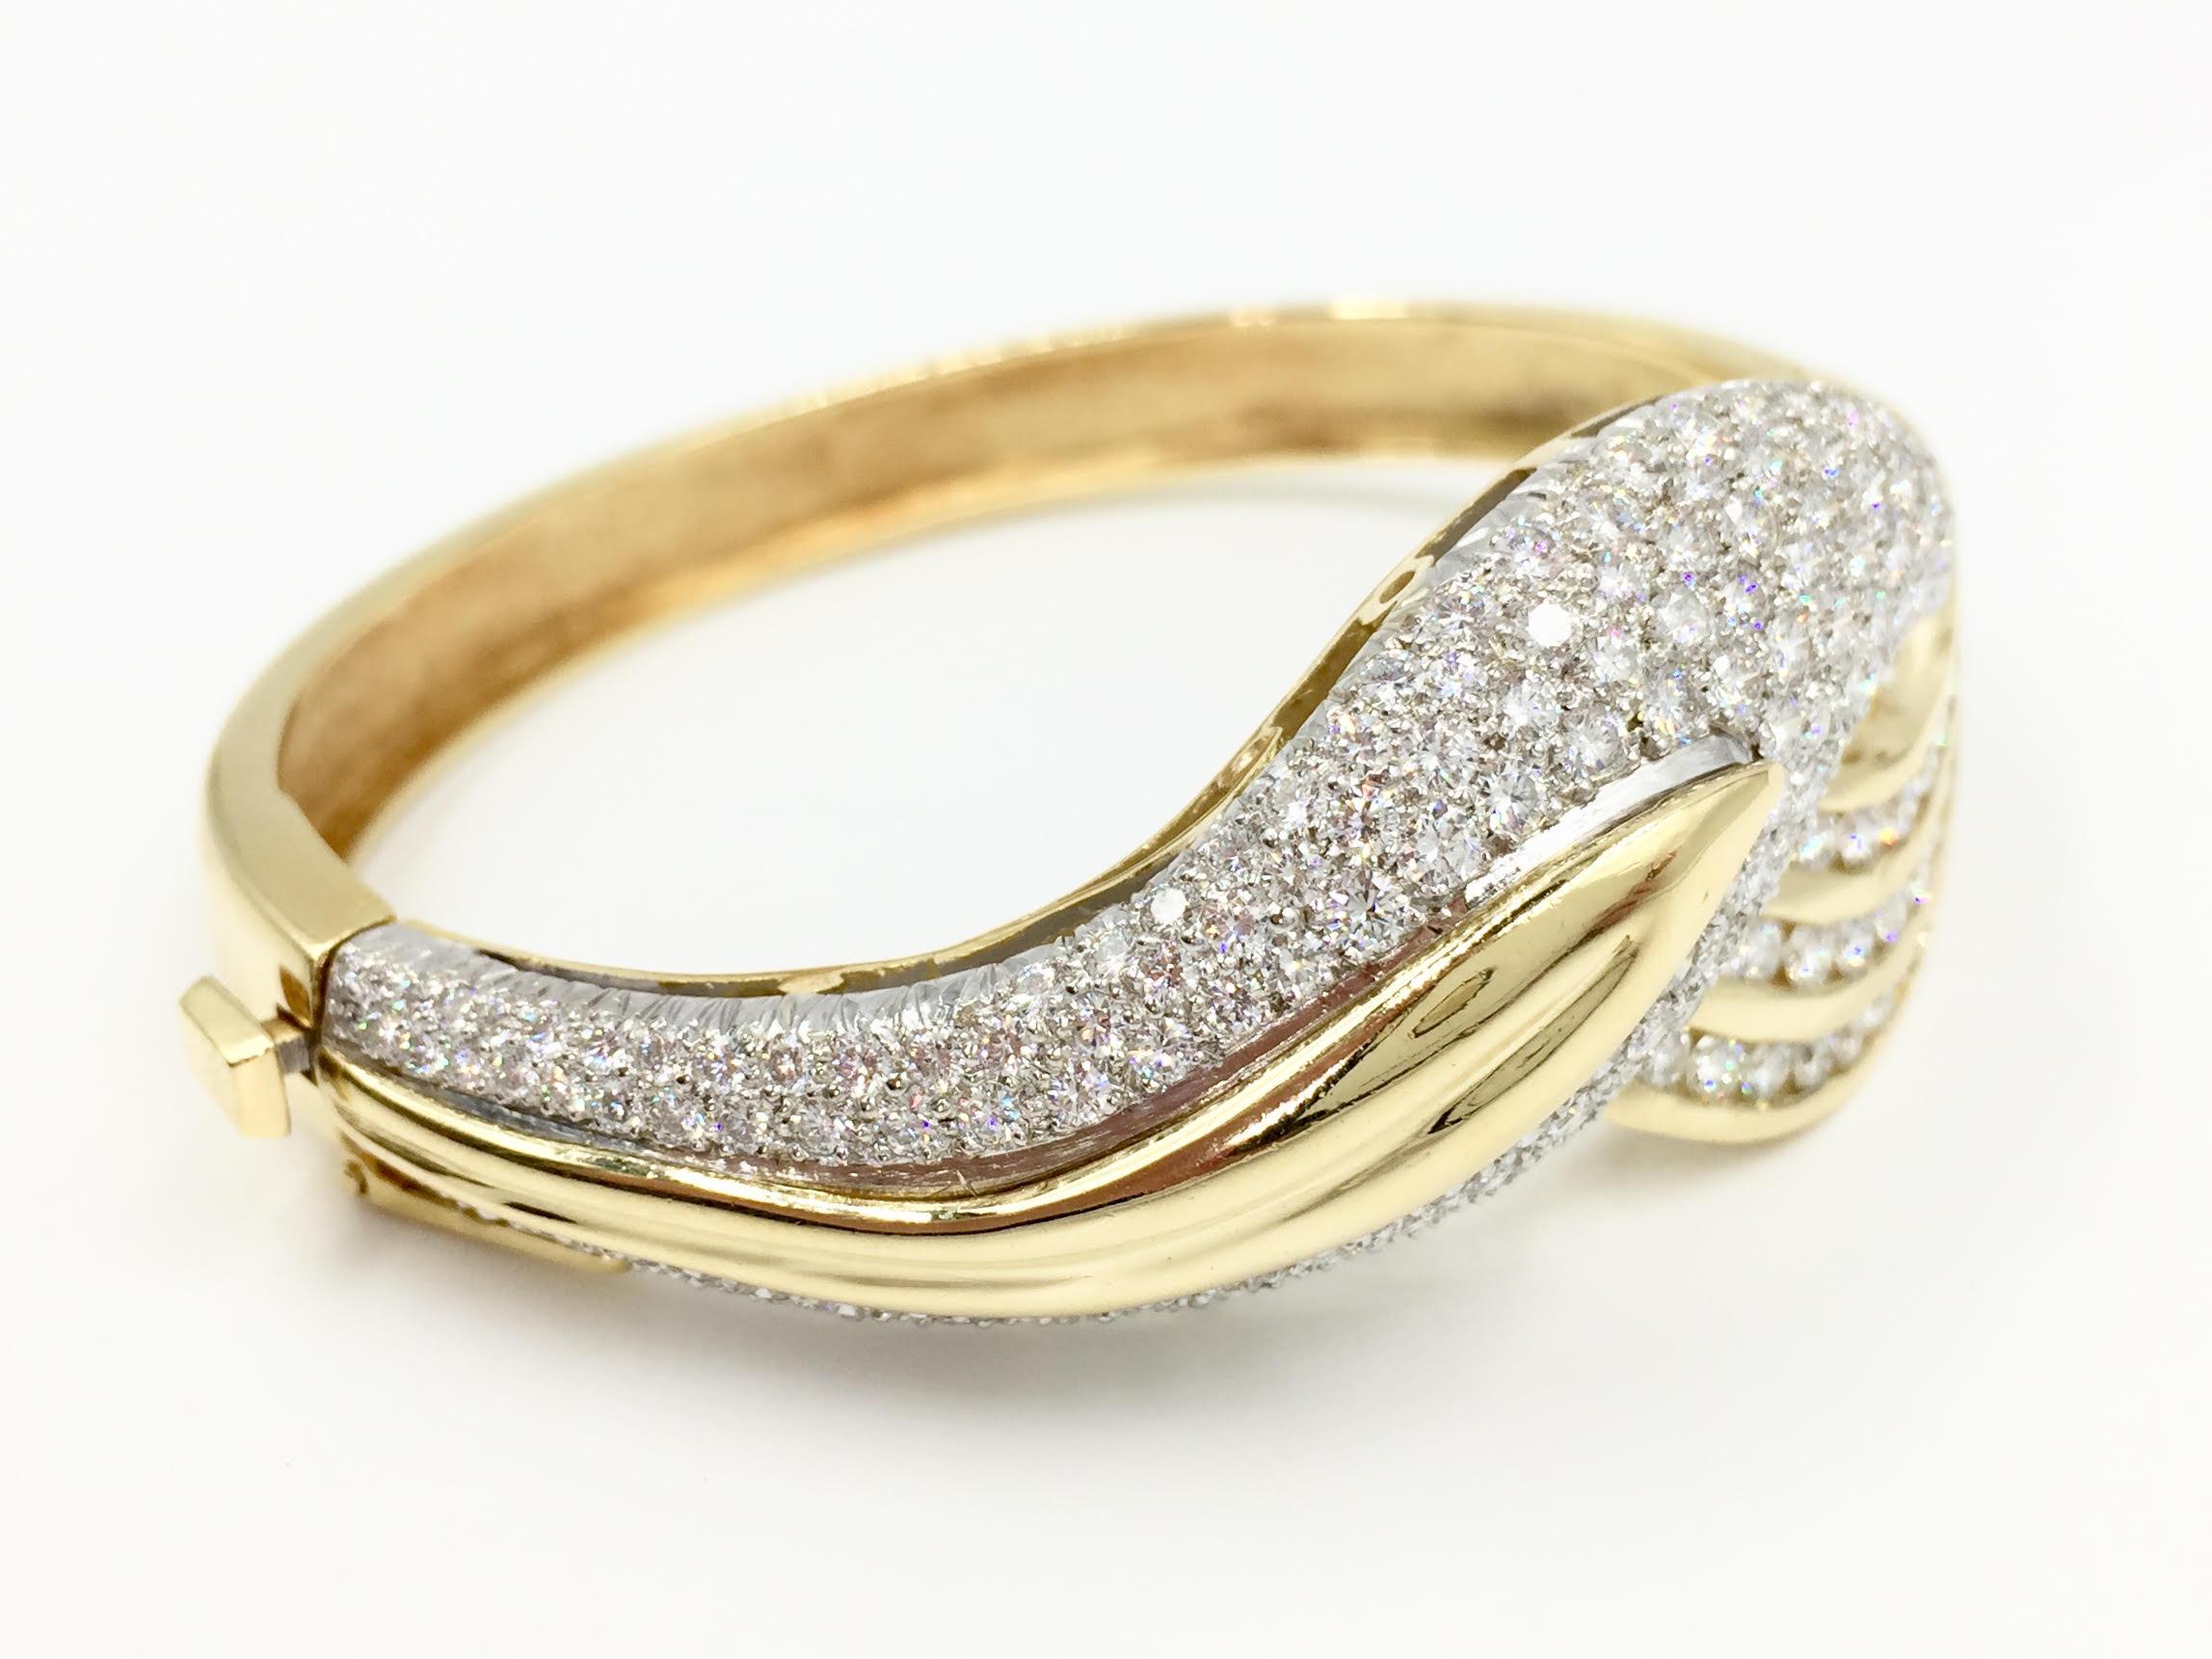 design of bangles in diamond